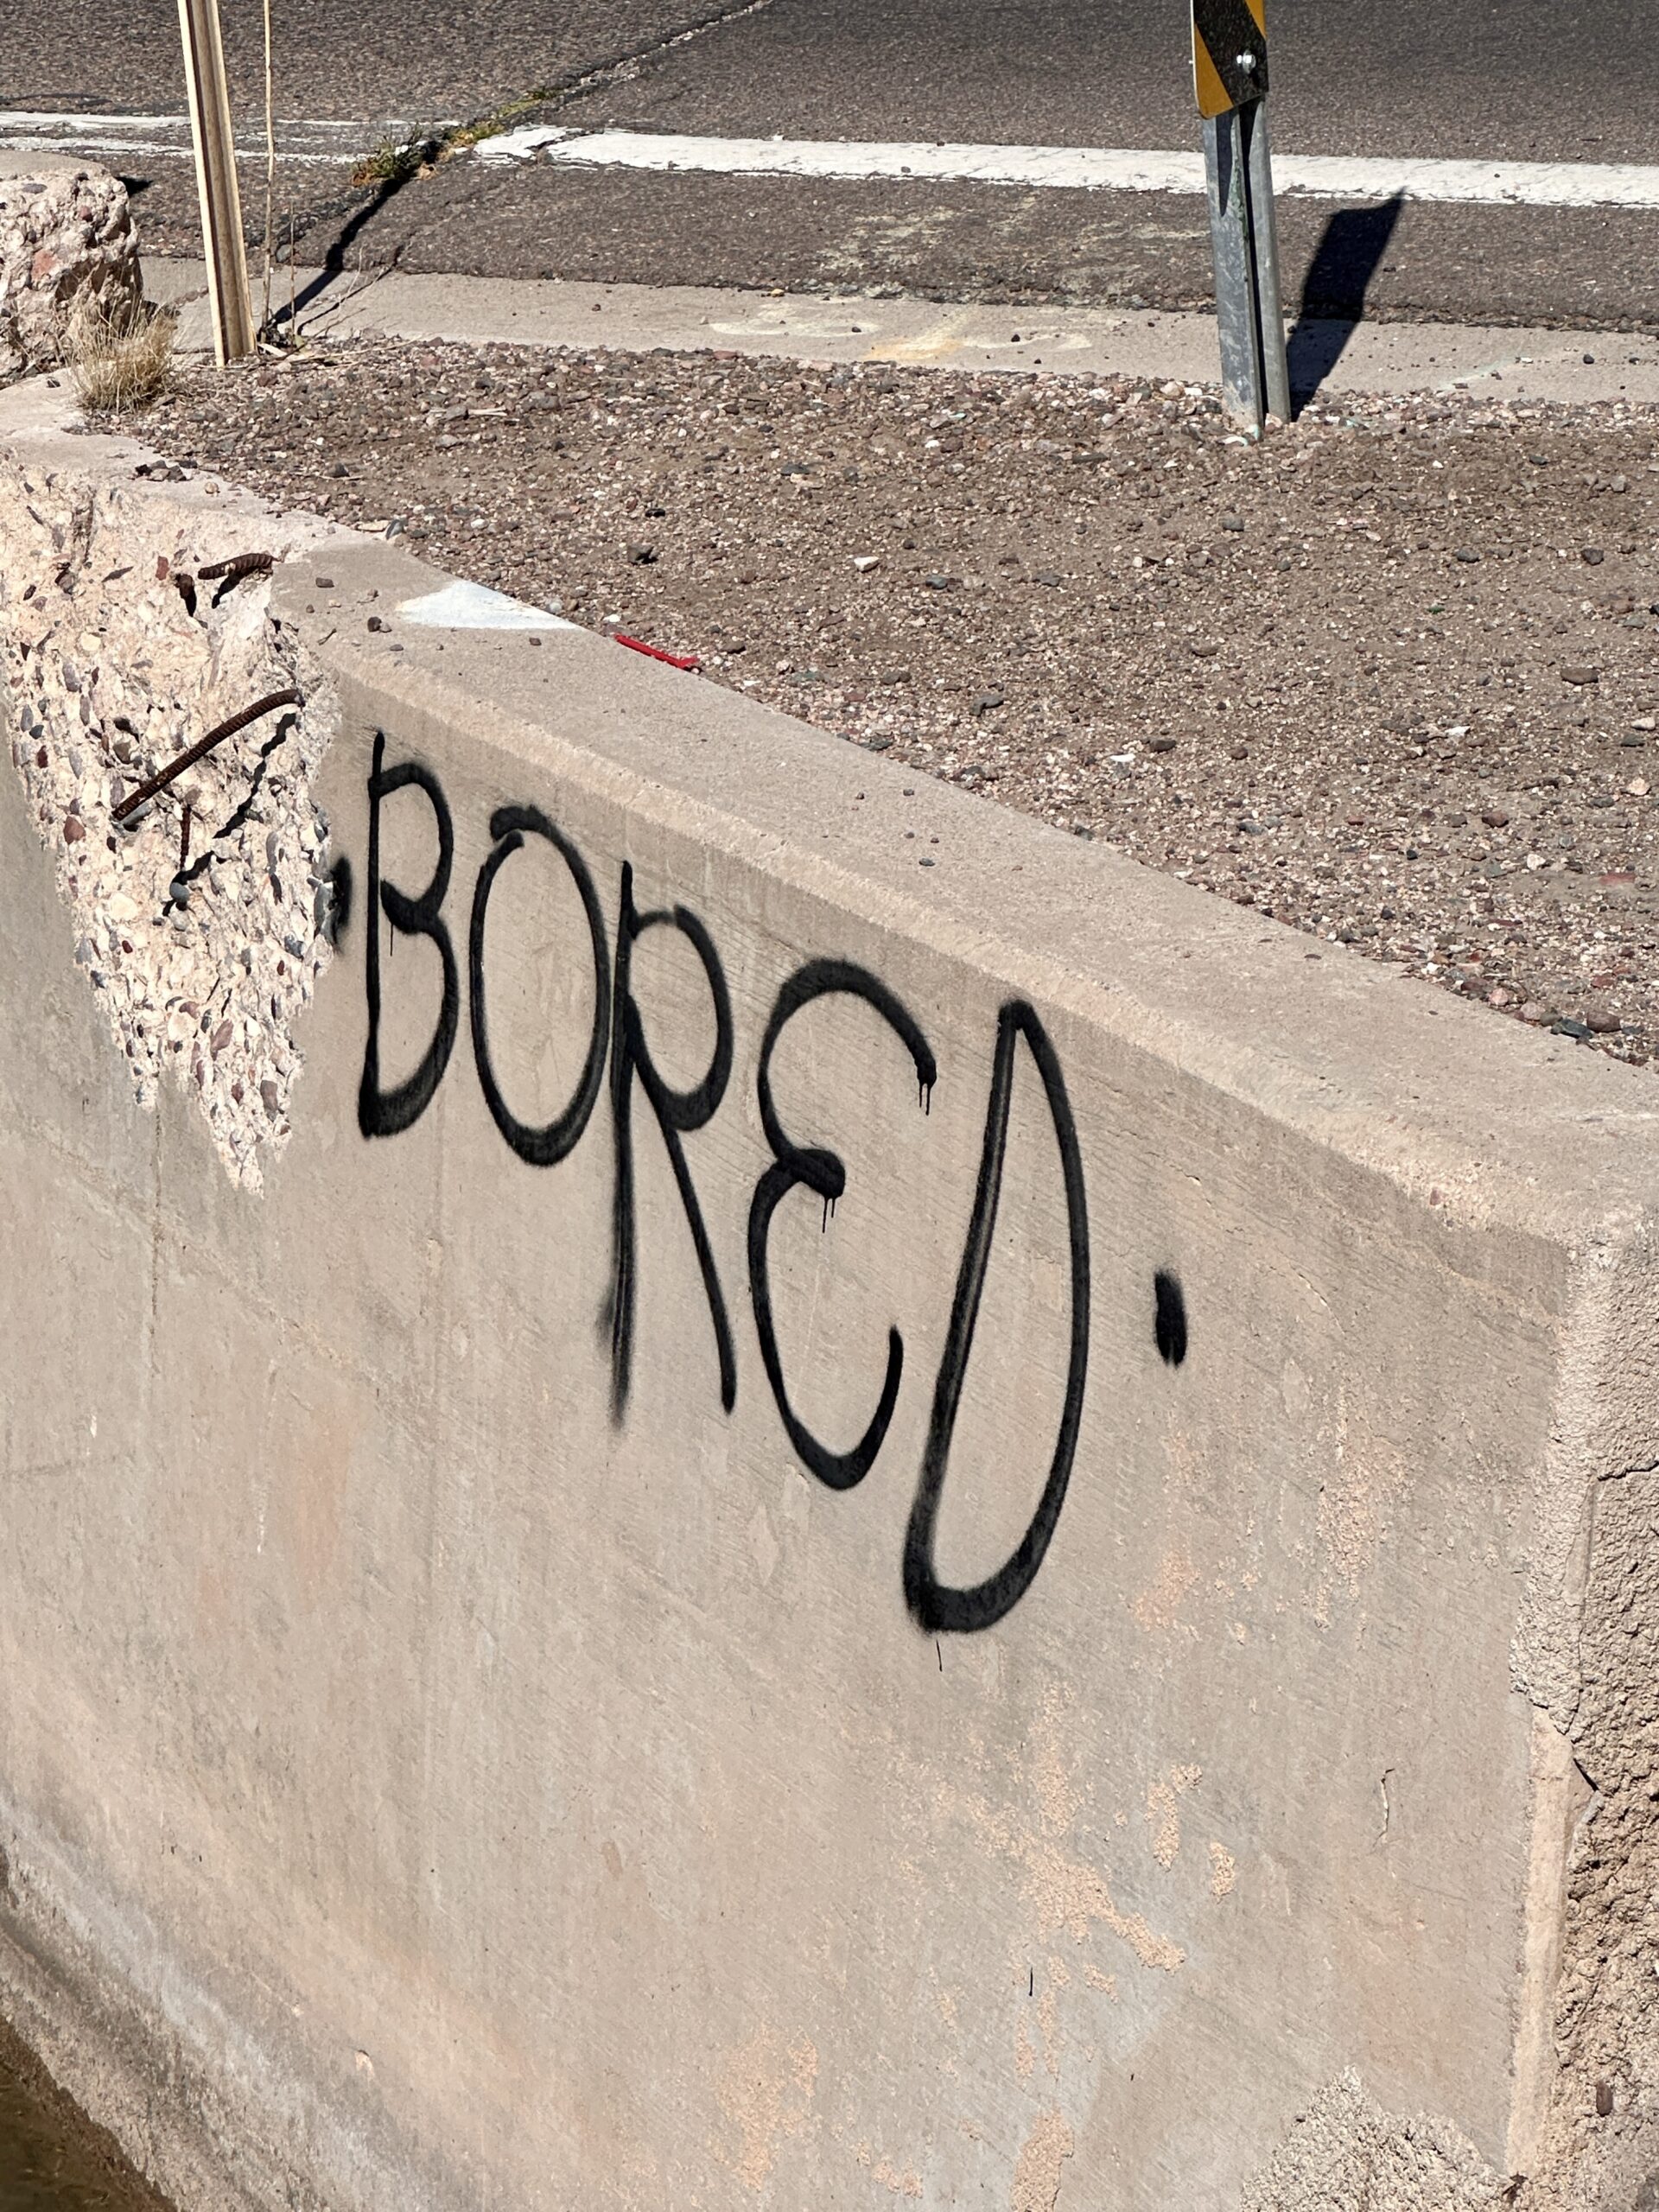 Grafiti on an overpass, Bored